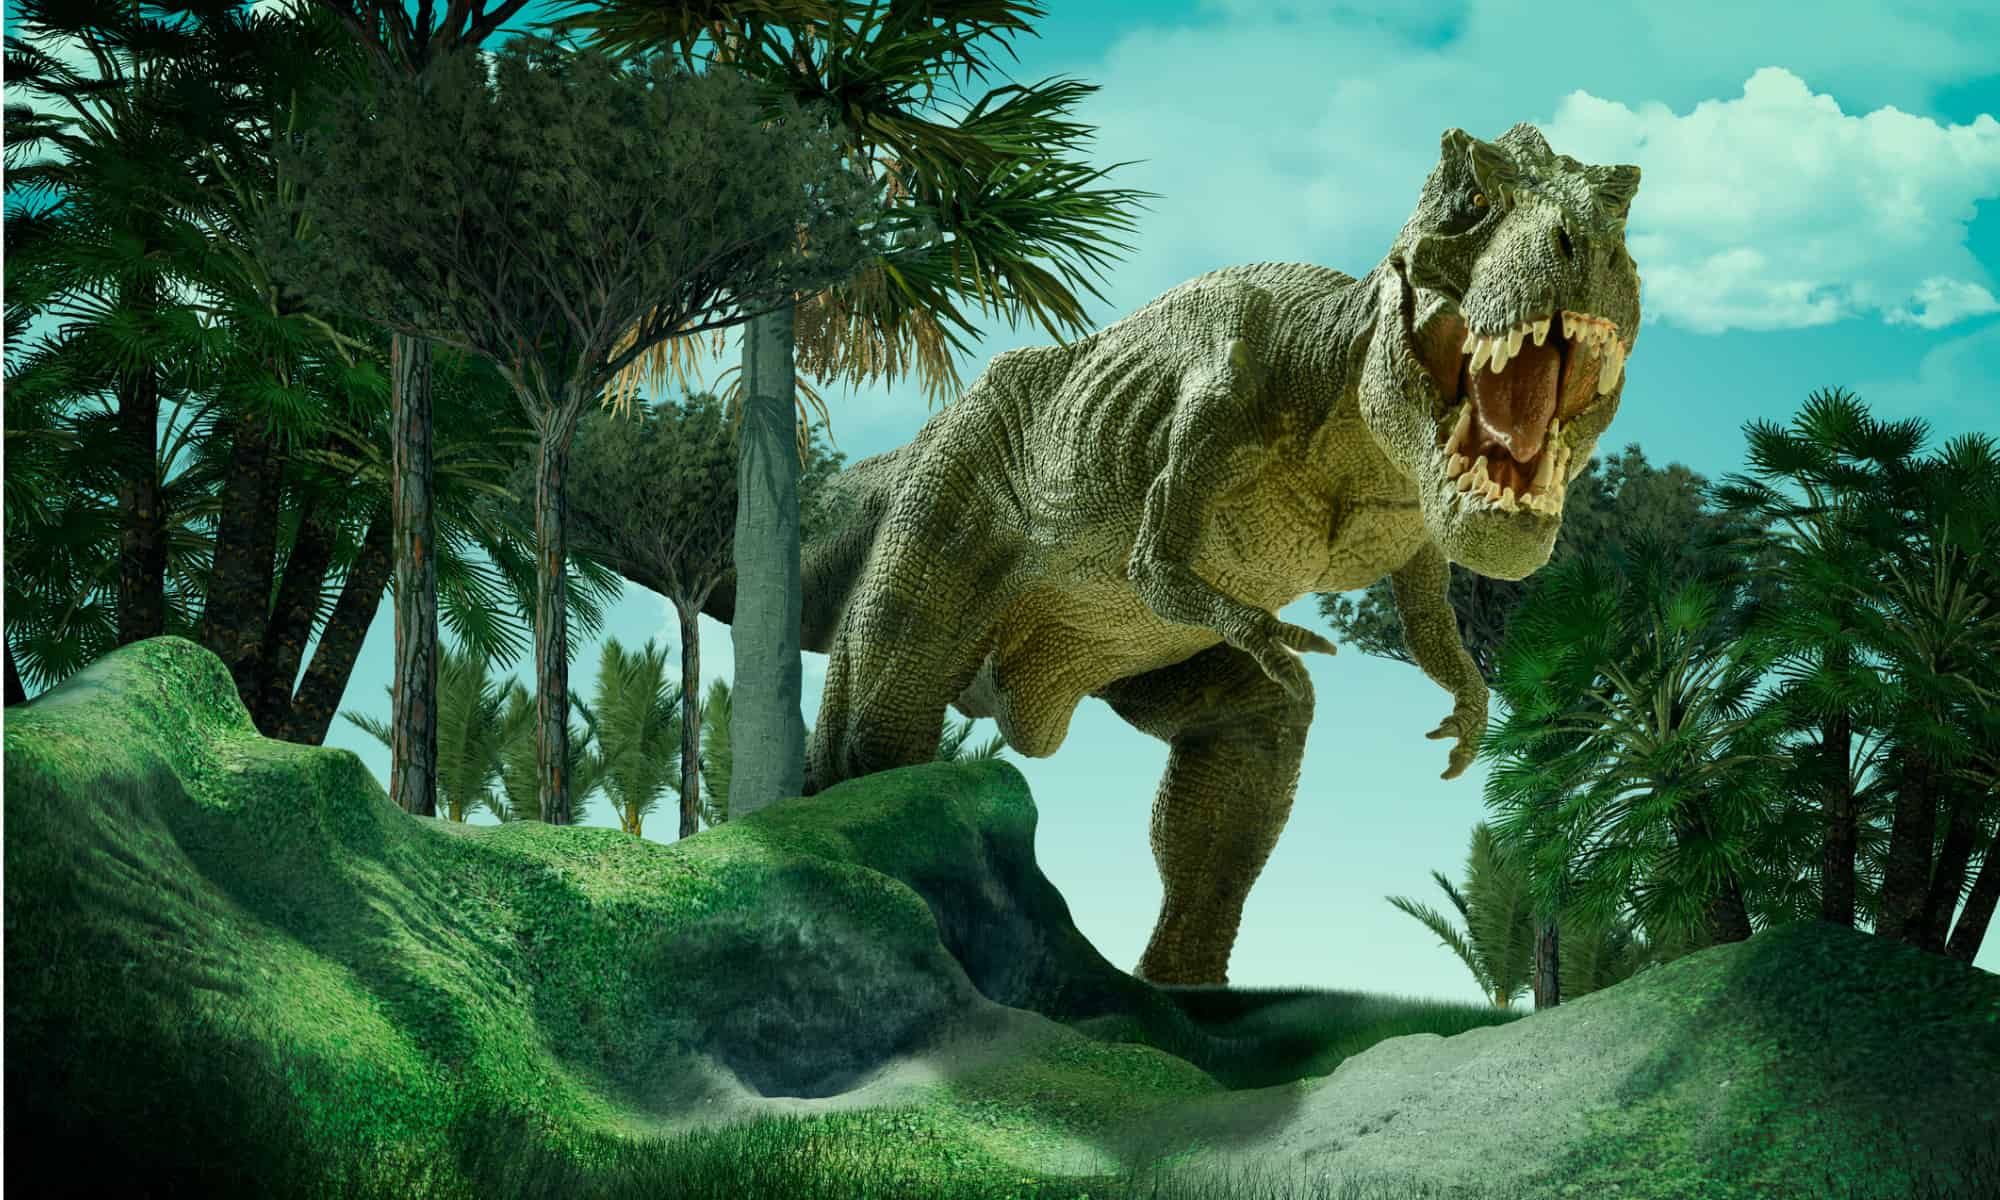 Tyrannosaurus rex: The world's most popular dinosaur, Dinosaurs